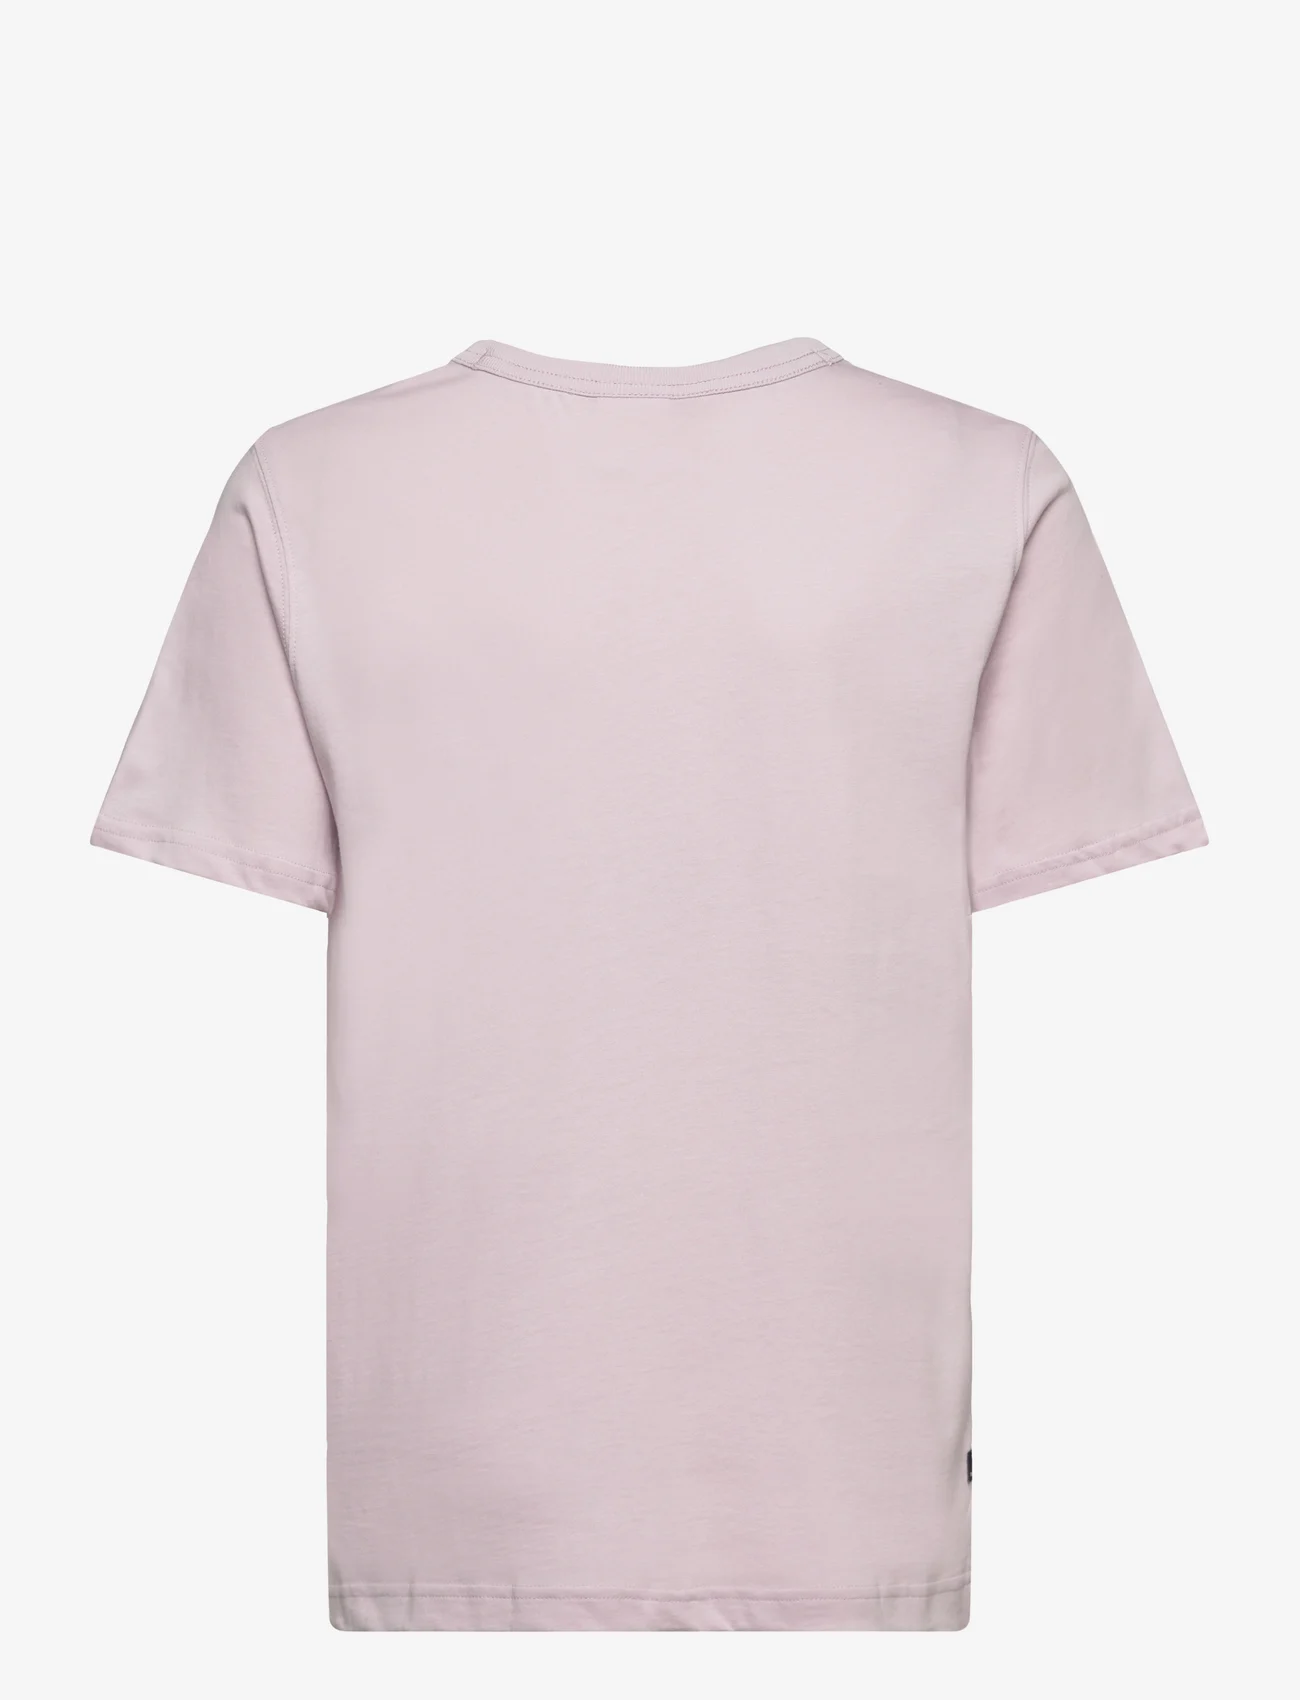 New Balance - NB Essentials Logo Tee - marškinėliai trumpomis rankovėmis - december sky - 1